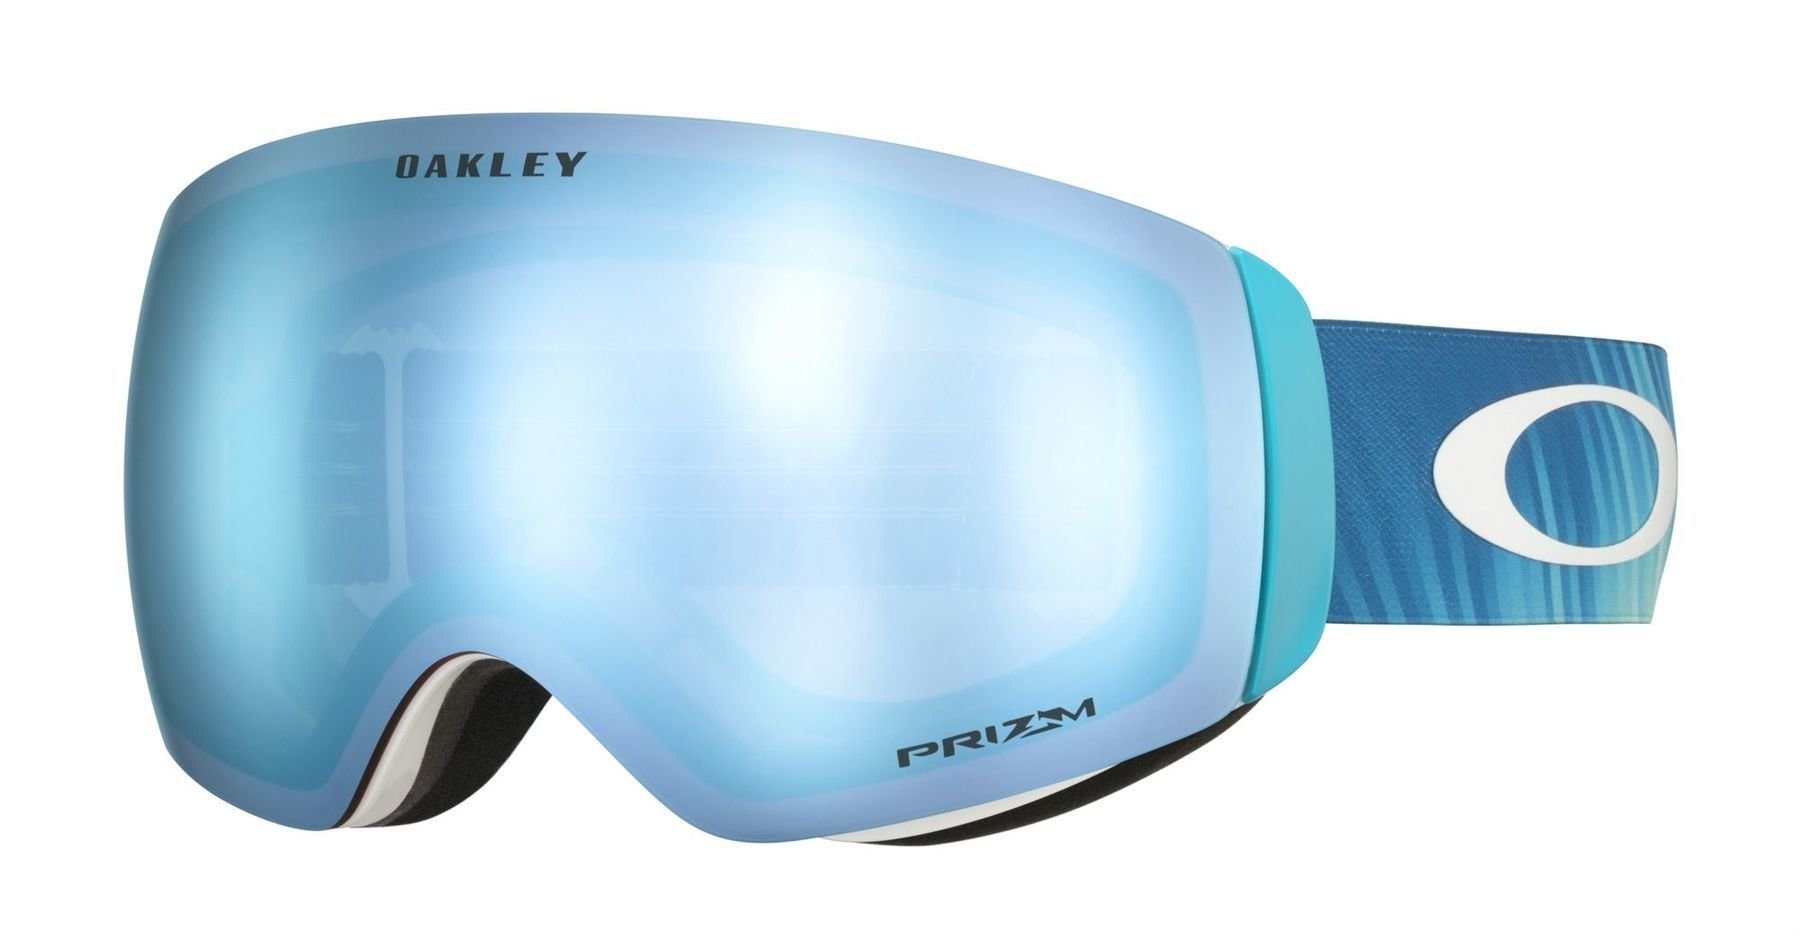 Ski-bril Oakley Flight Deck XM Ski-bril